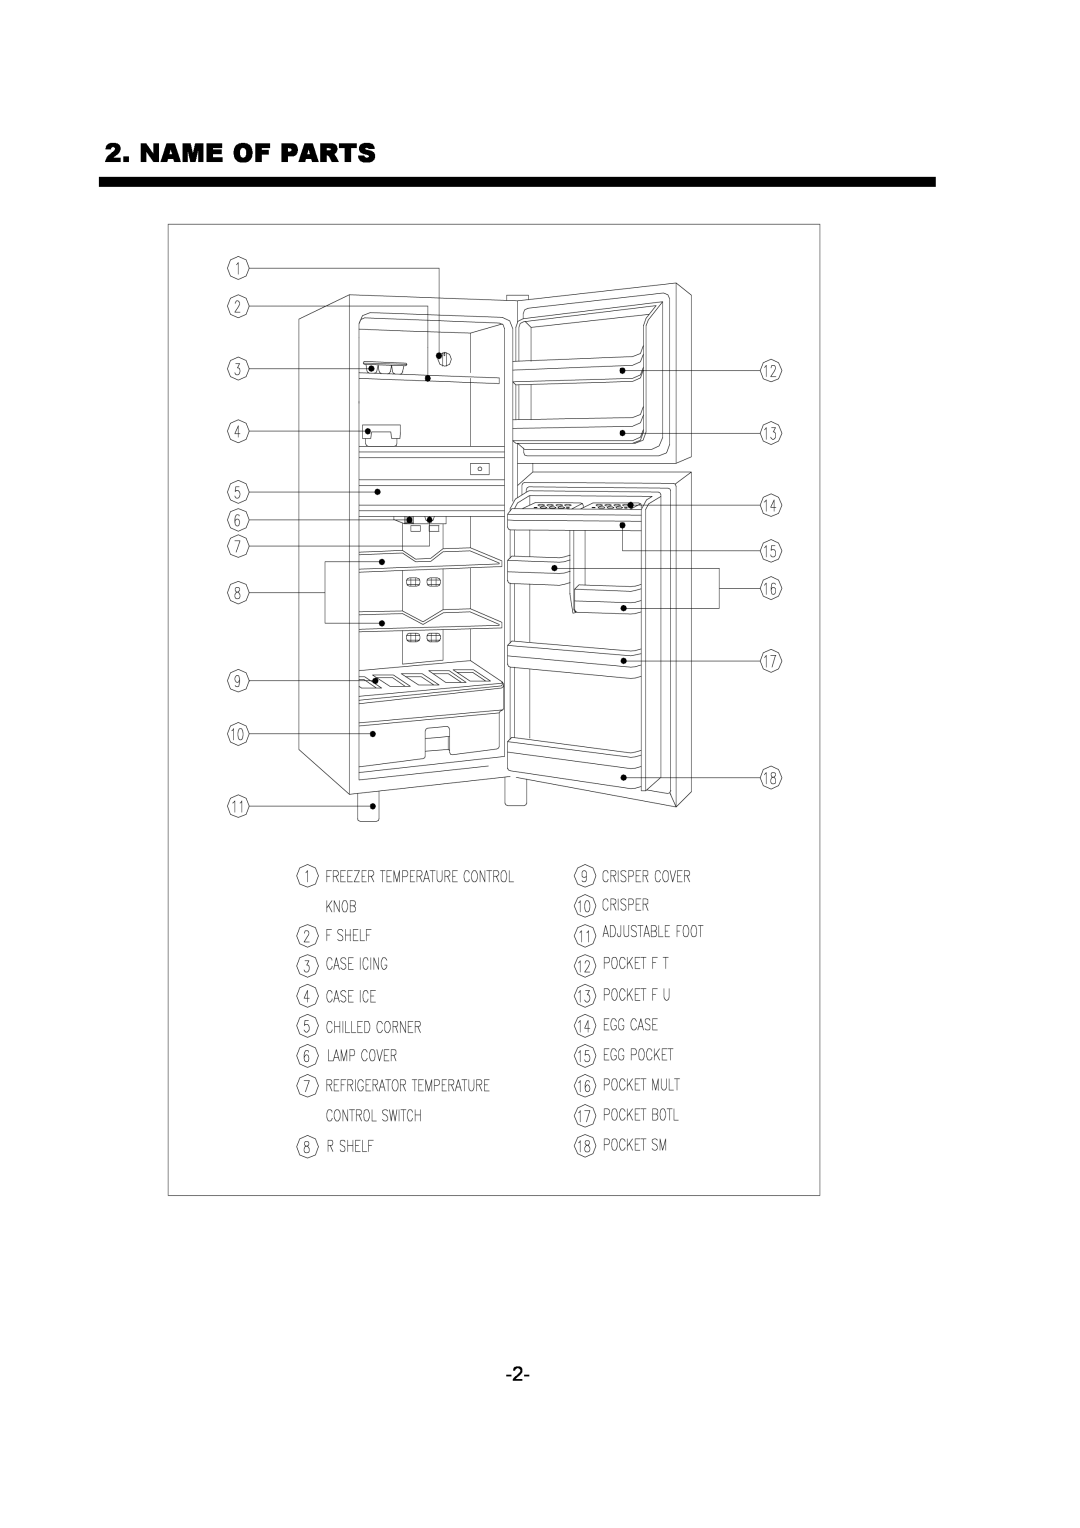 Daewoo FR-330 service manual Name Of Parts 